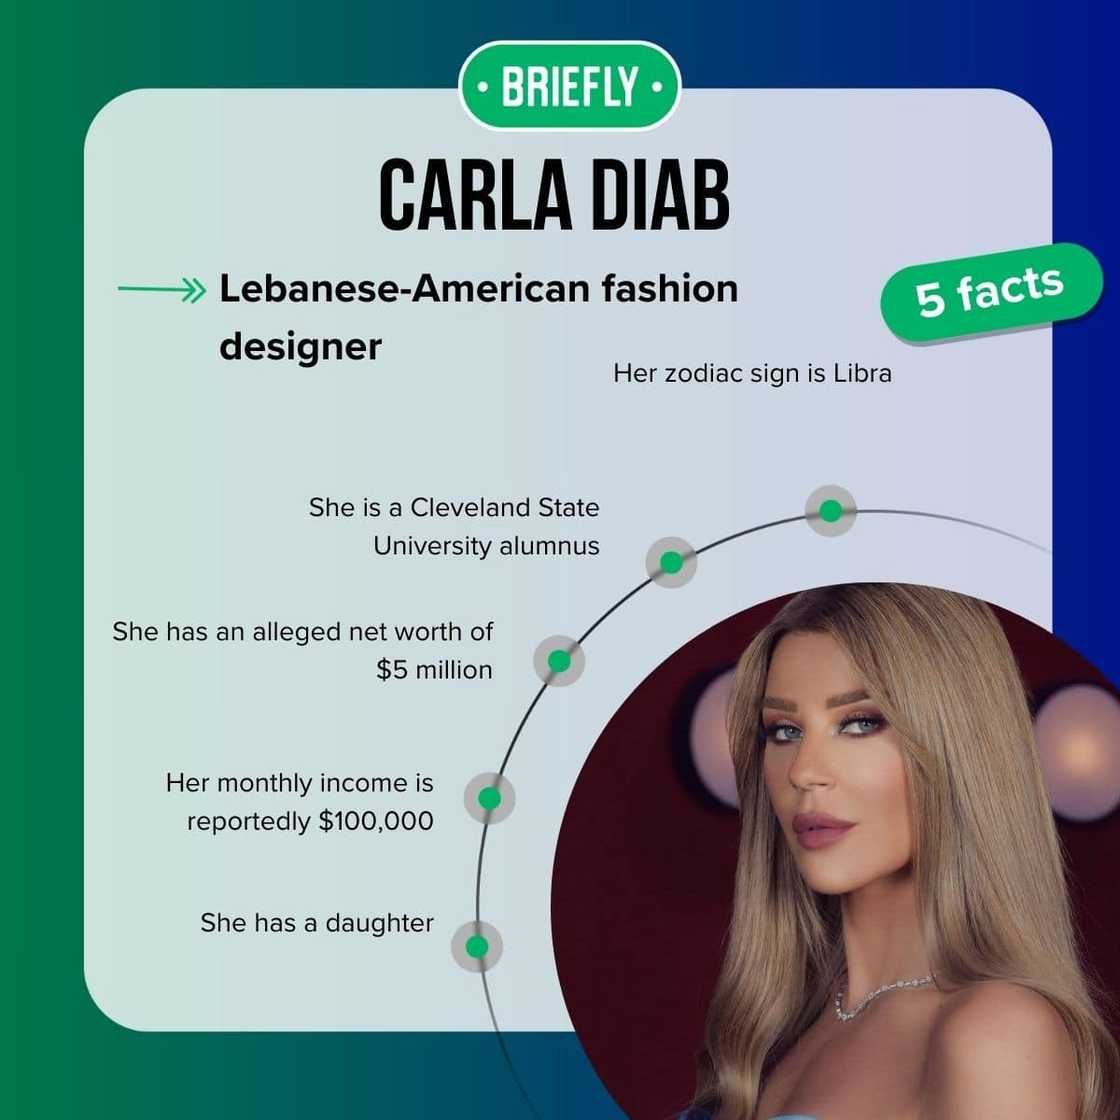 Carla Diab's facts